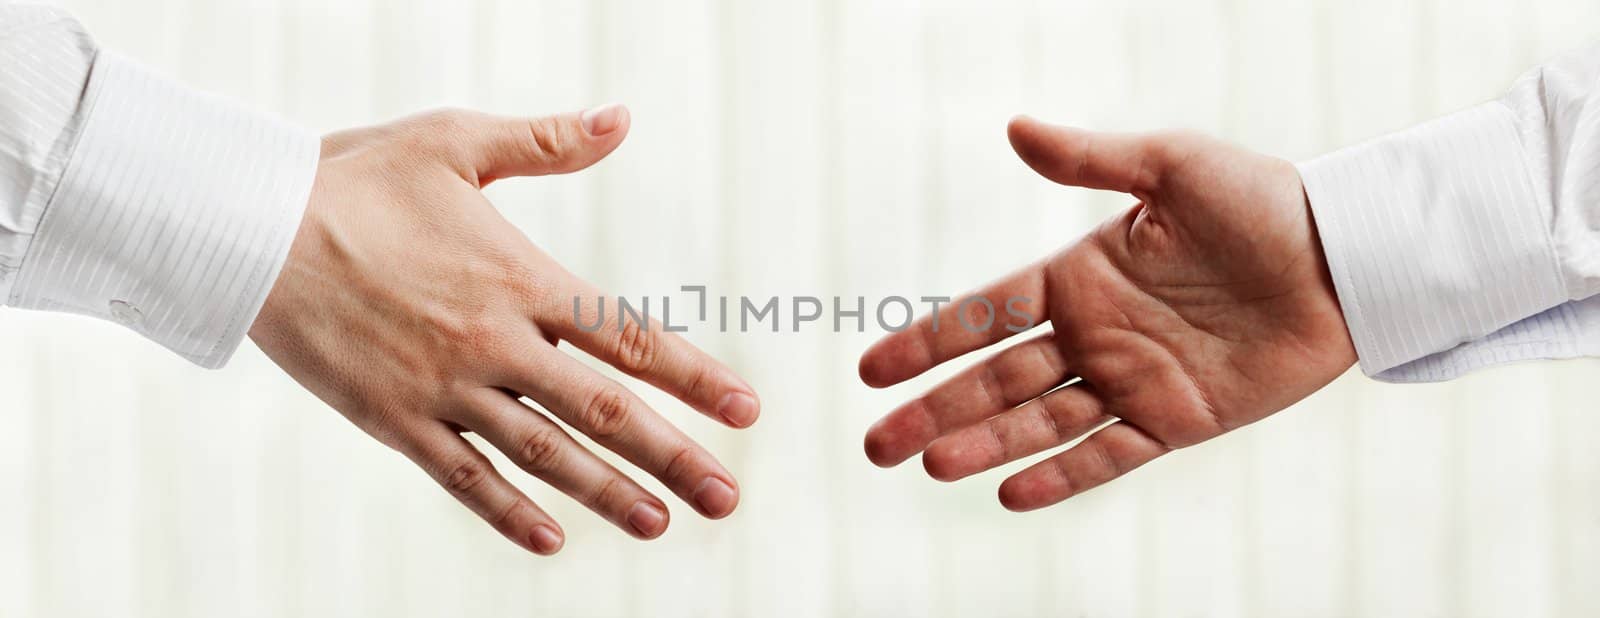 Handshake by ia_64